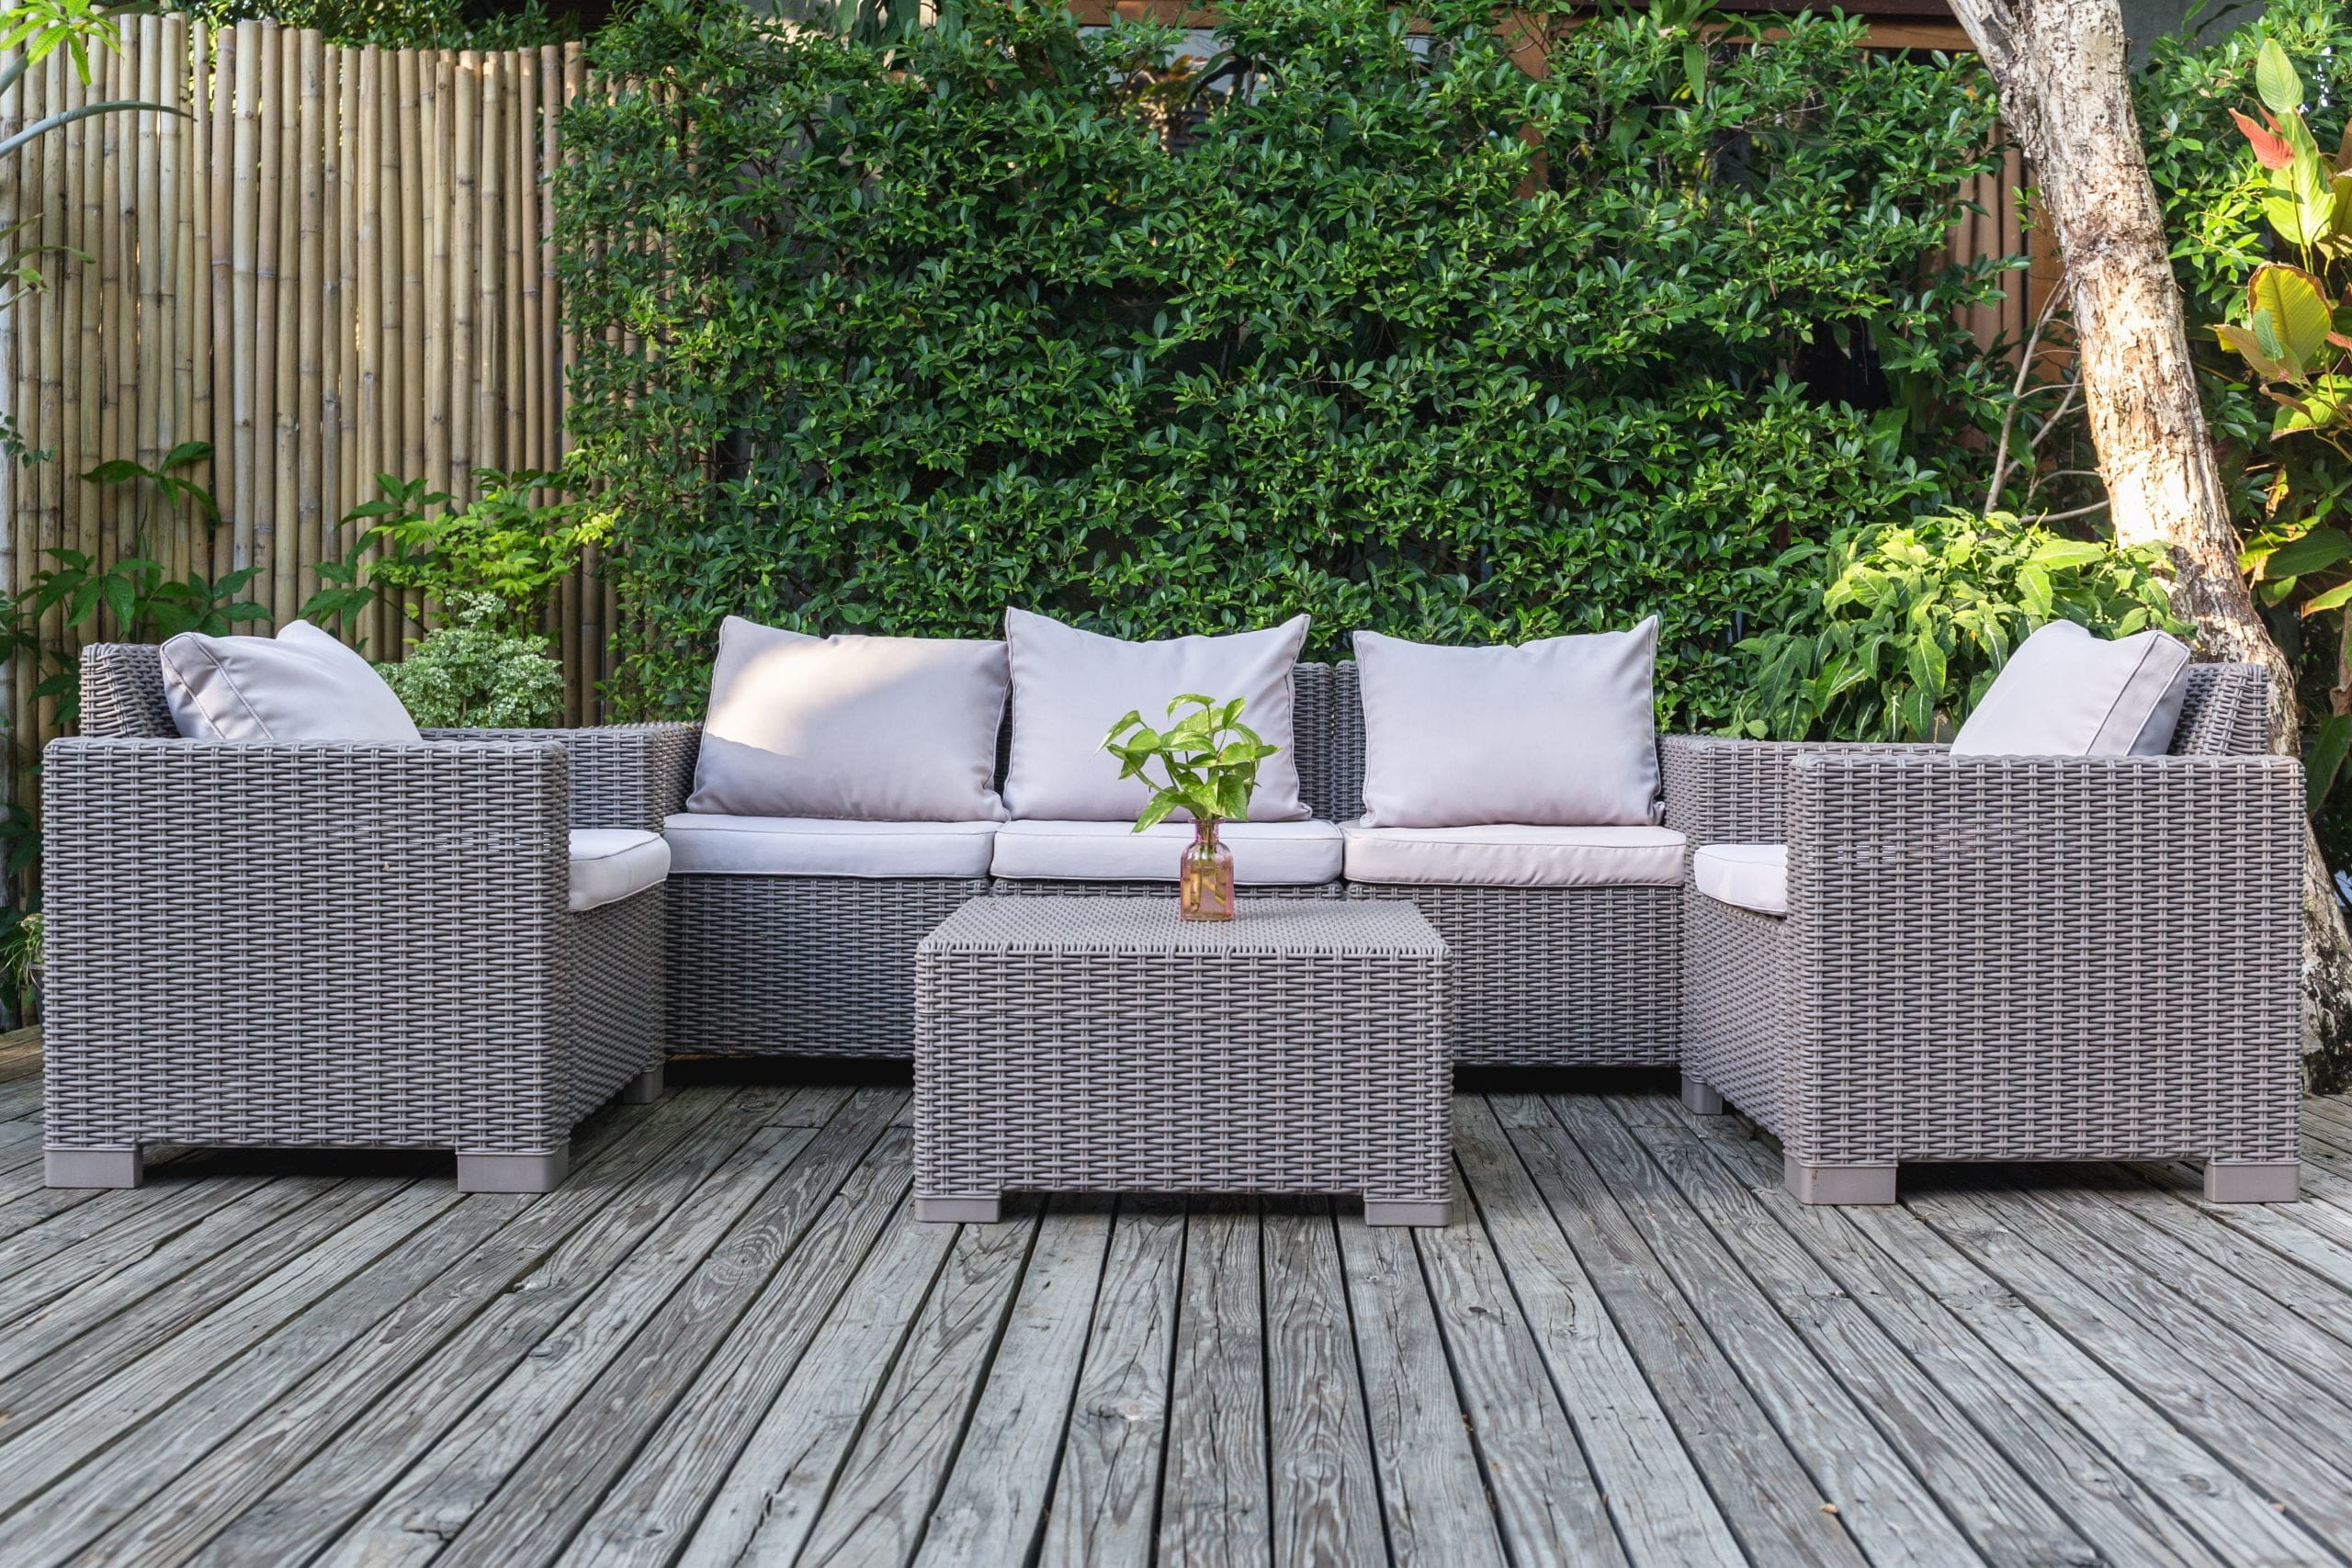 Backyard-patio-with-outdoor-rattan-furniture